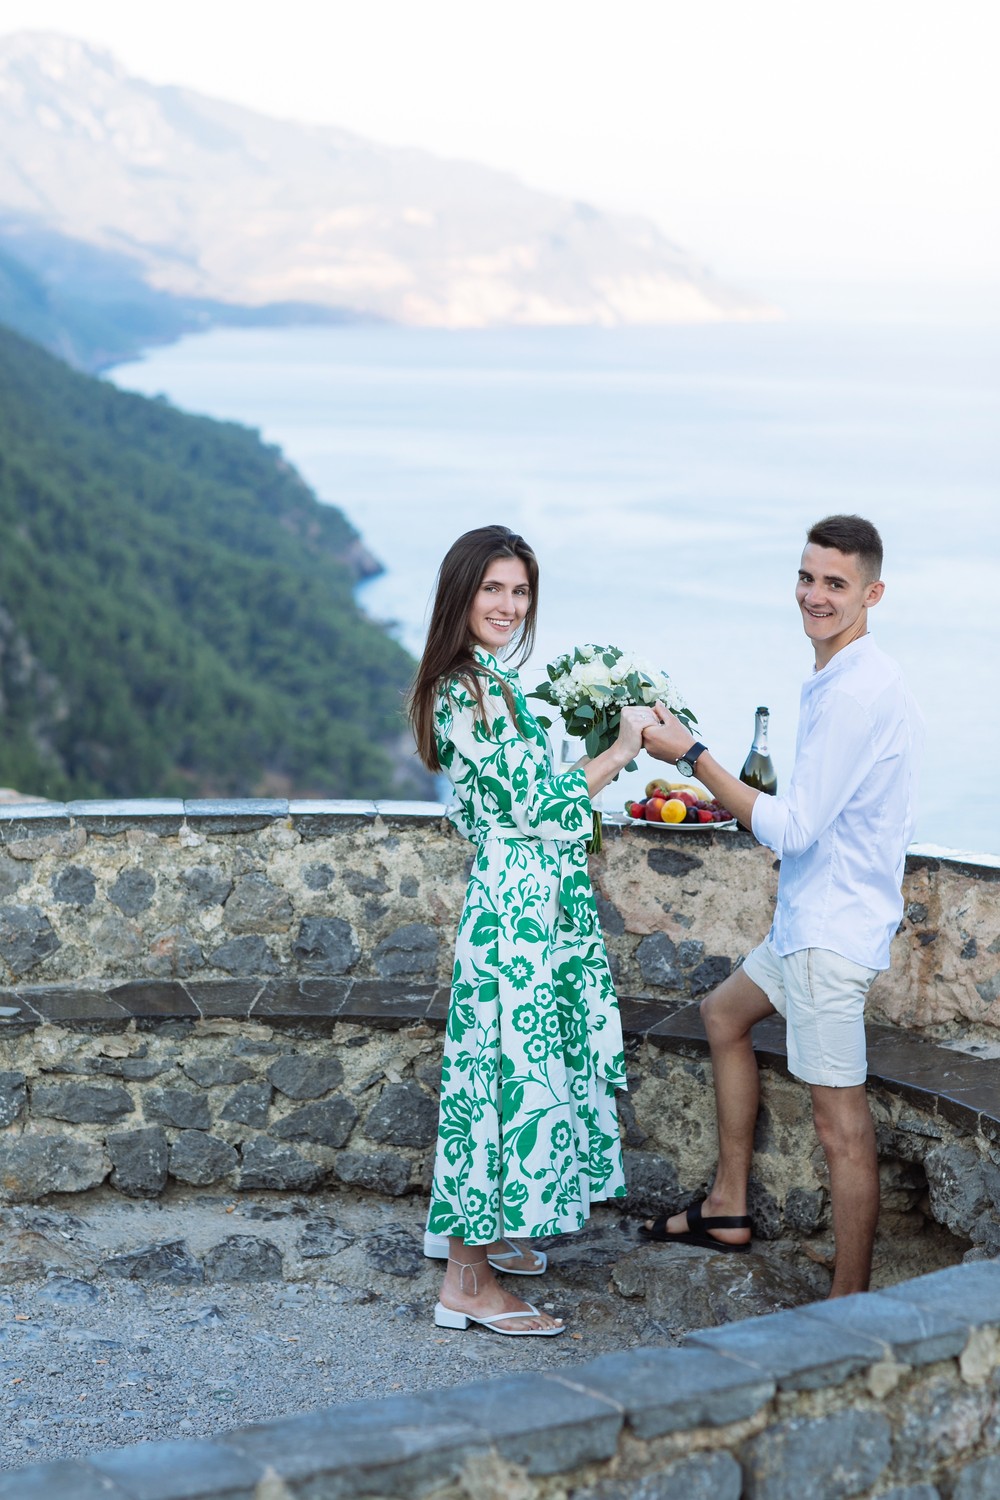 Deya, Mallorca | Oleg & Victoria's Engagement 